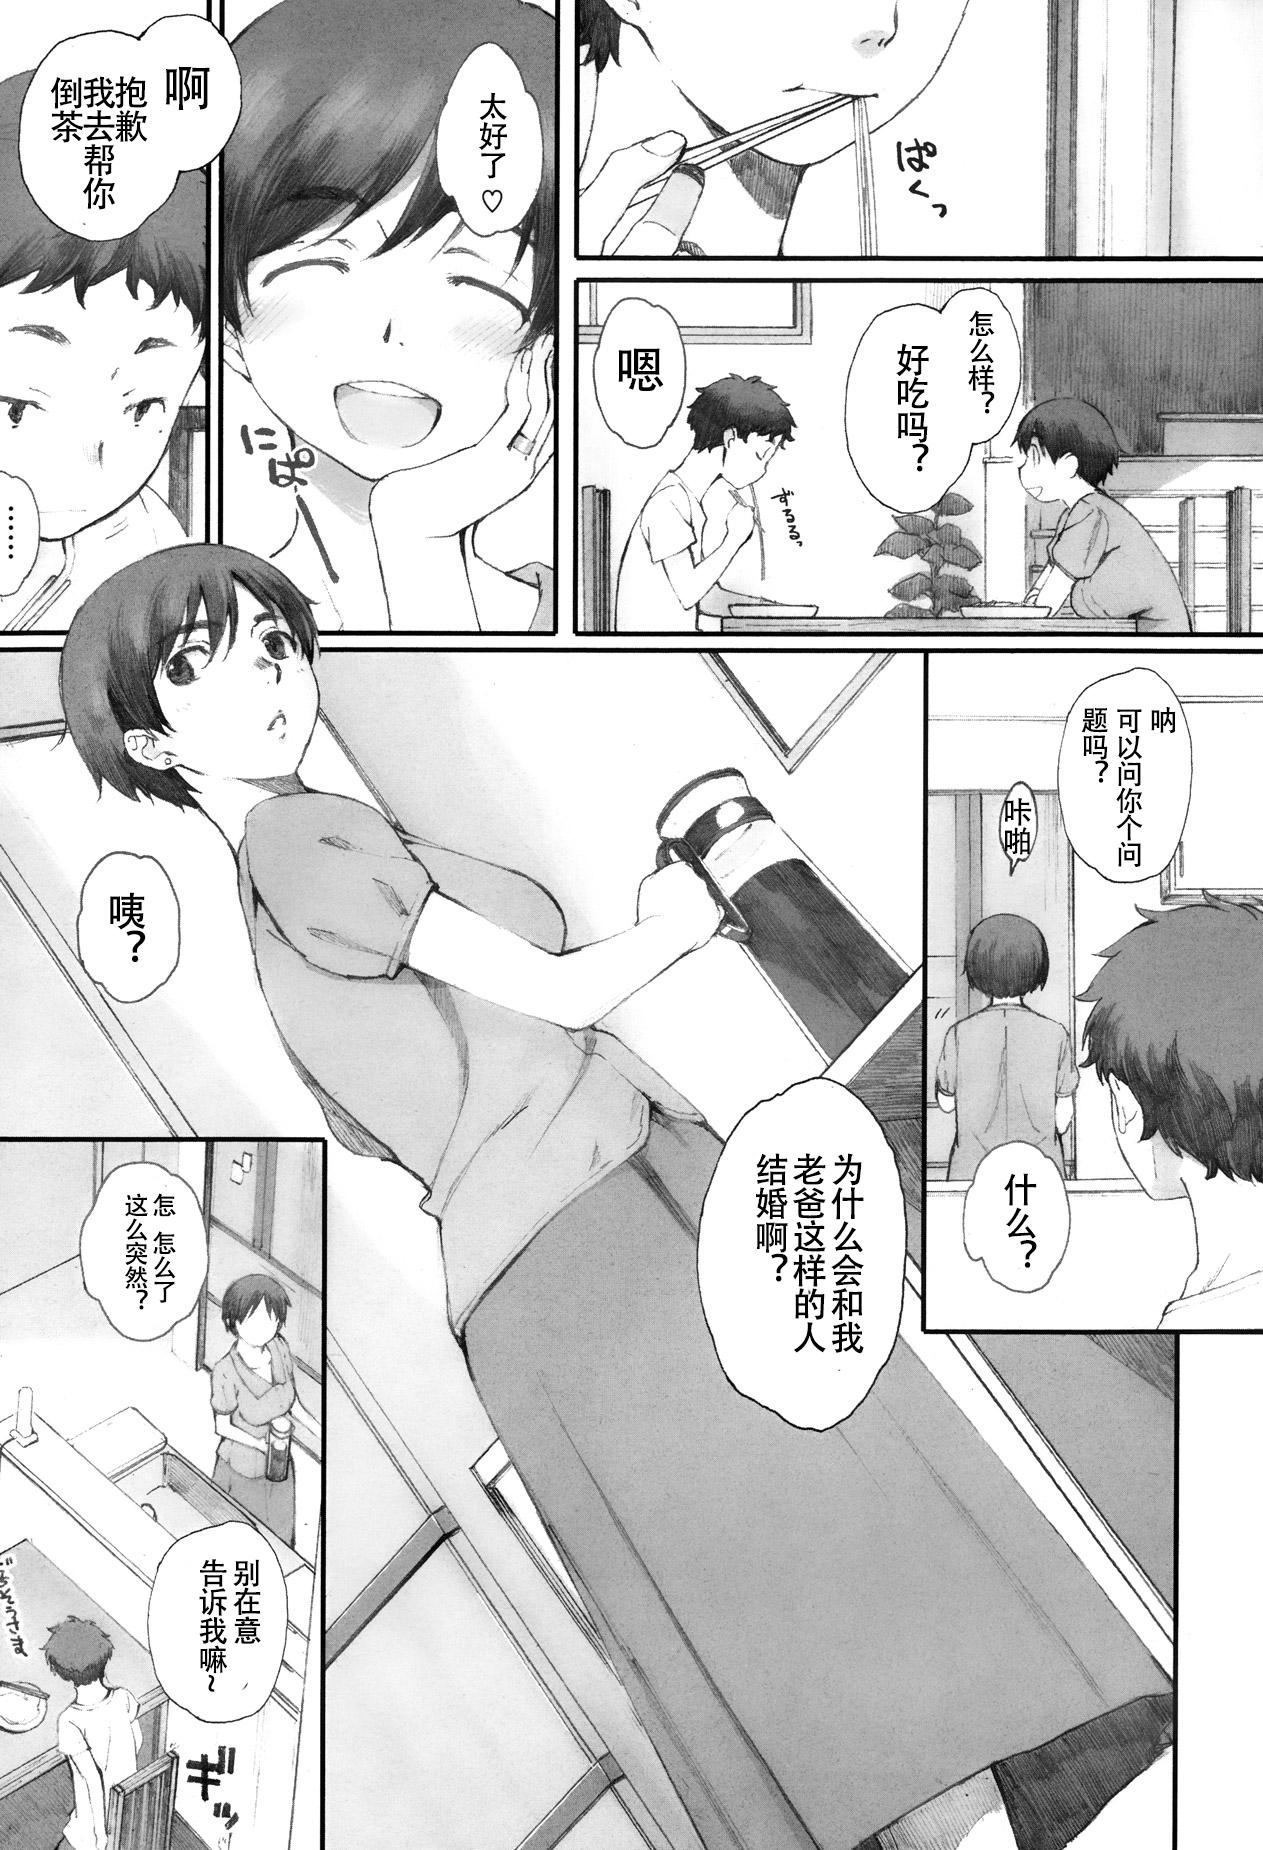 Strapon Kamakiri no su Milfporn - Page 4